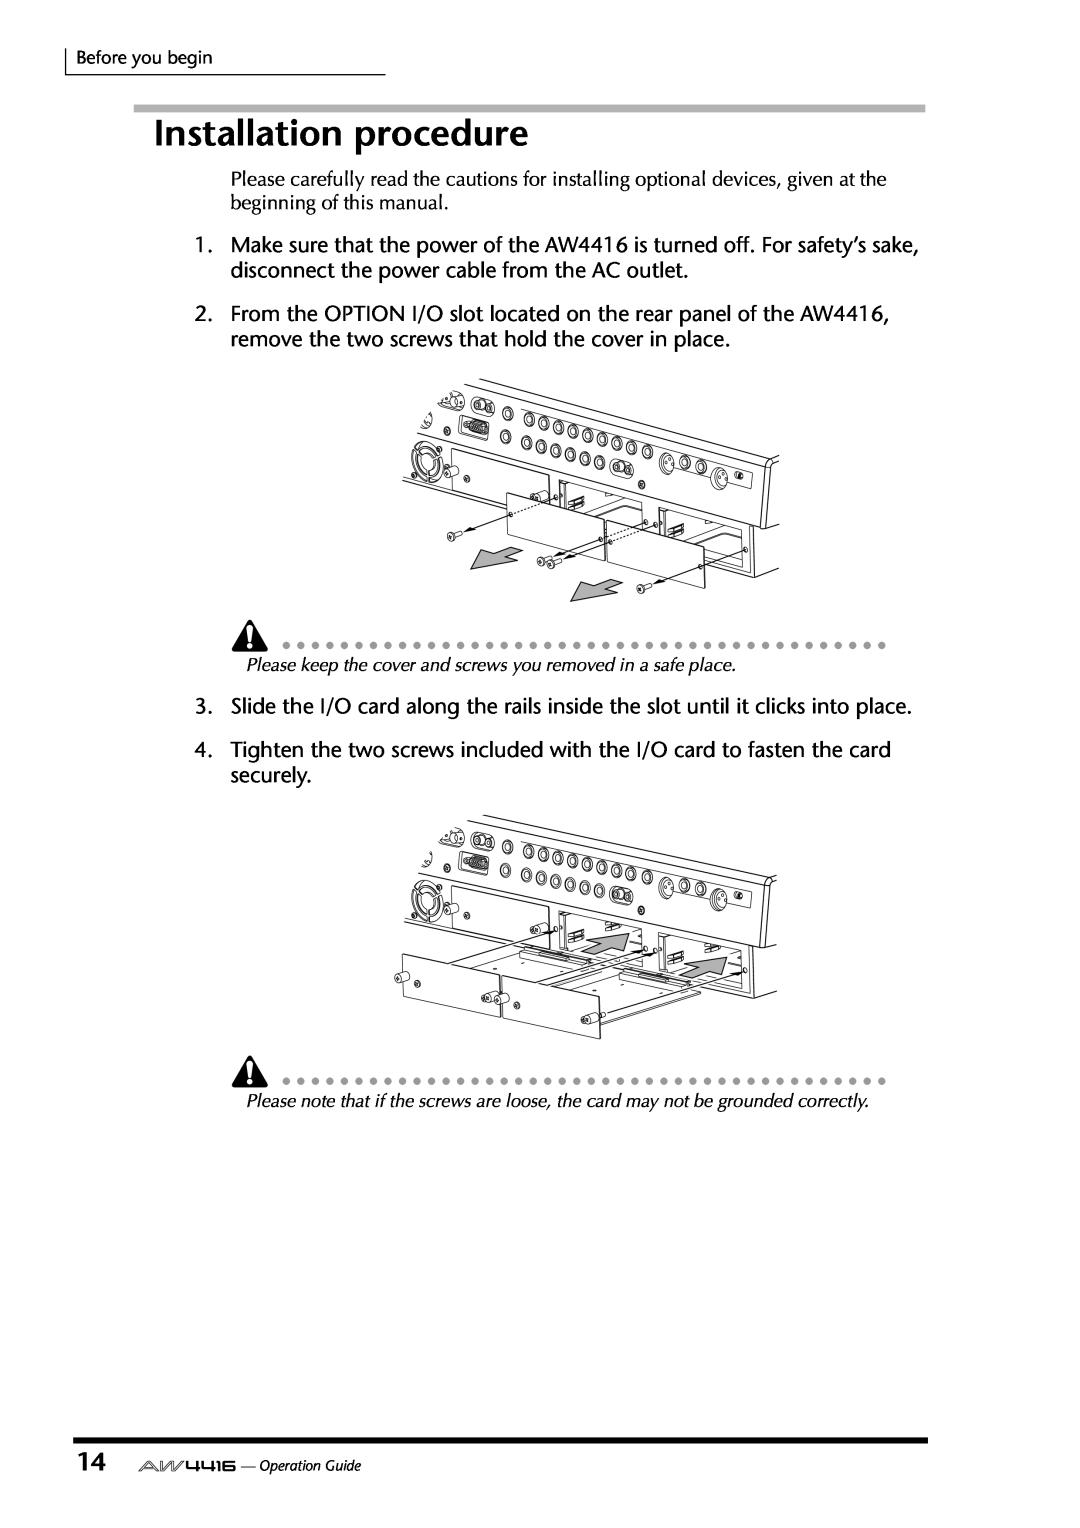 Yamaha AW4416 manual Installation procedure 